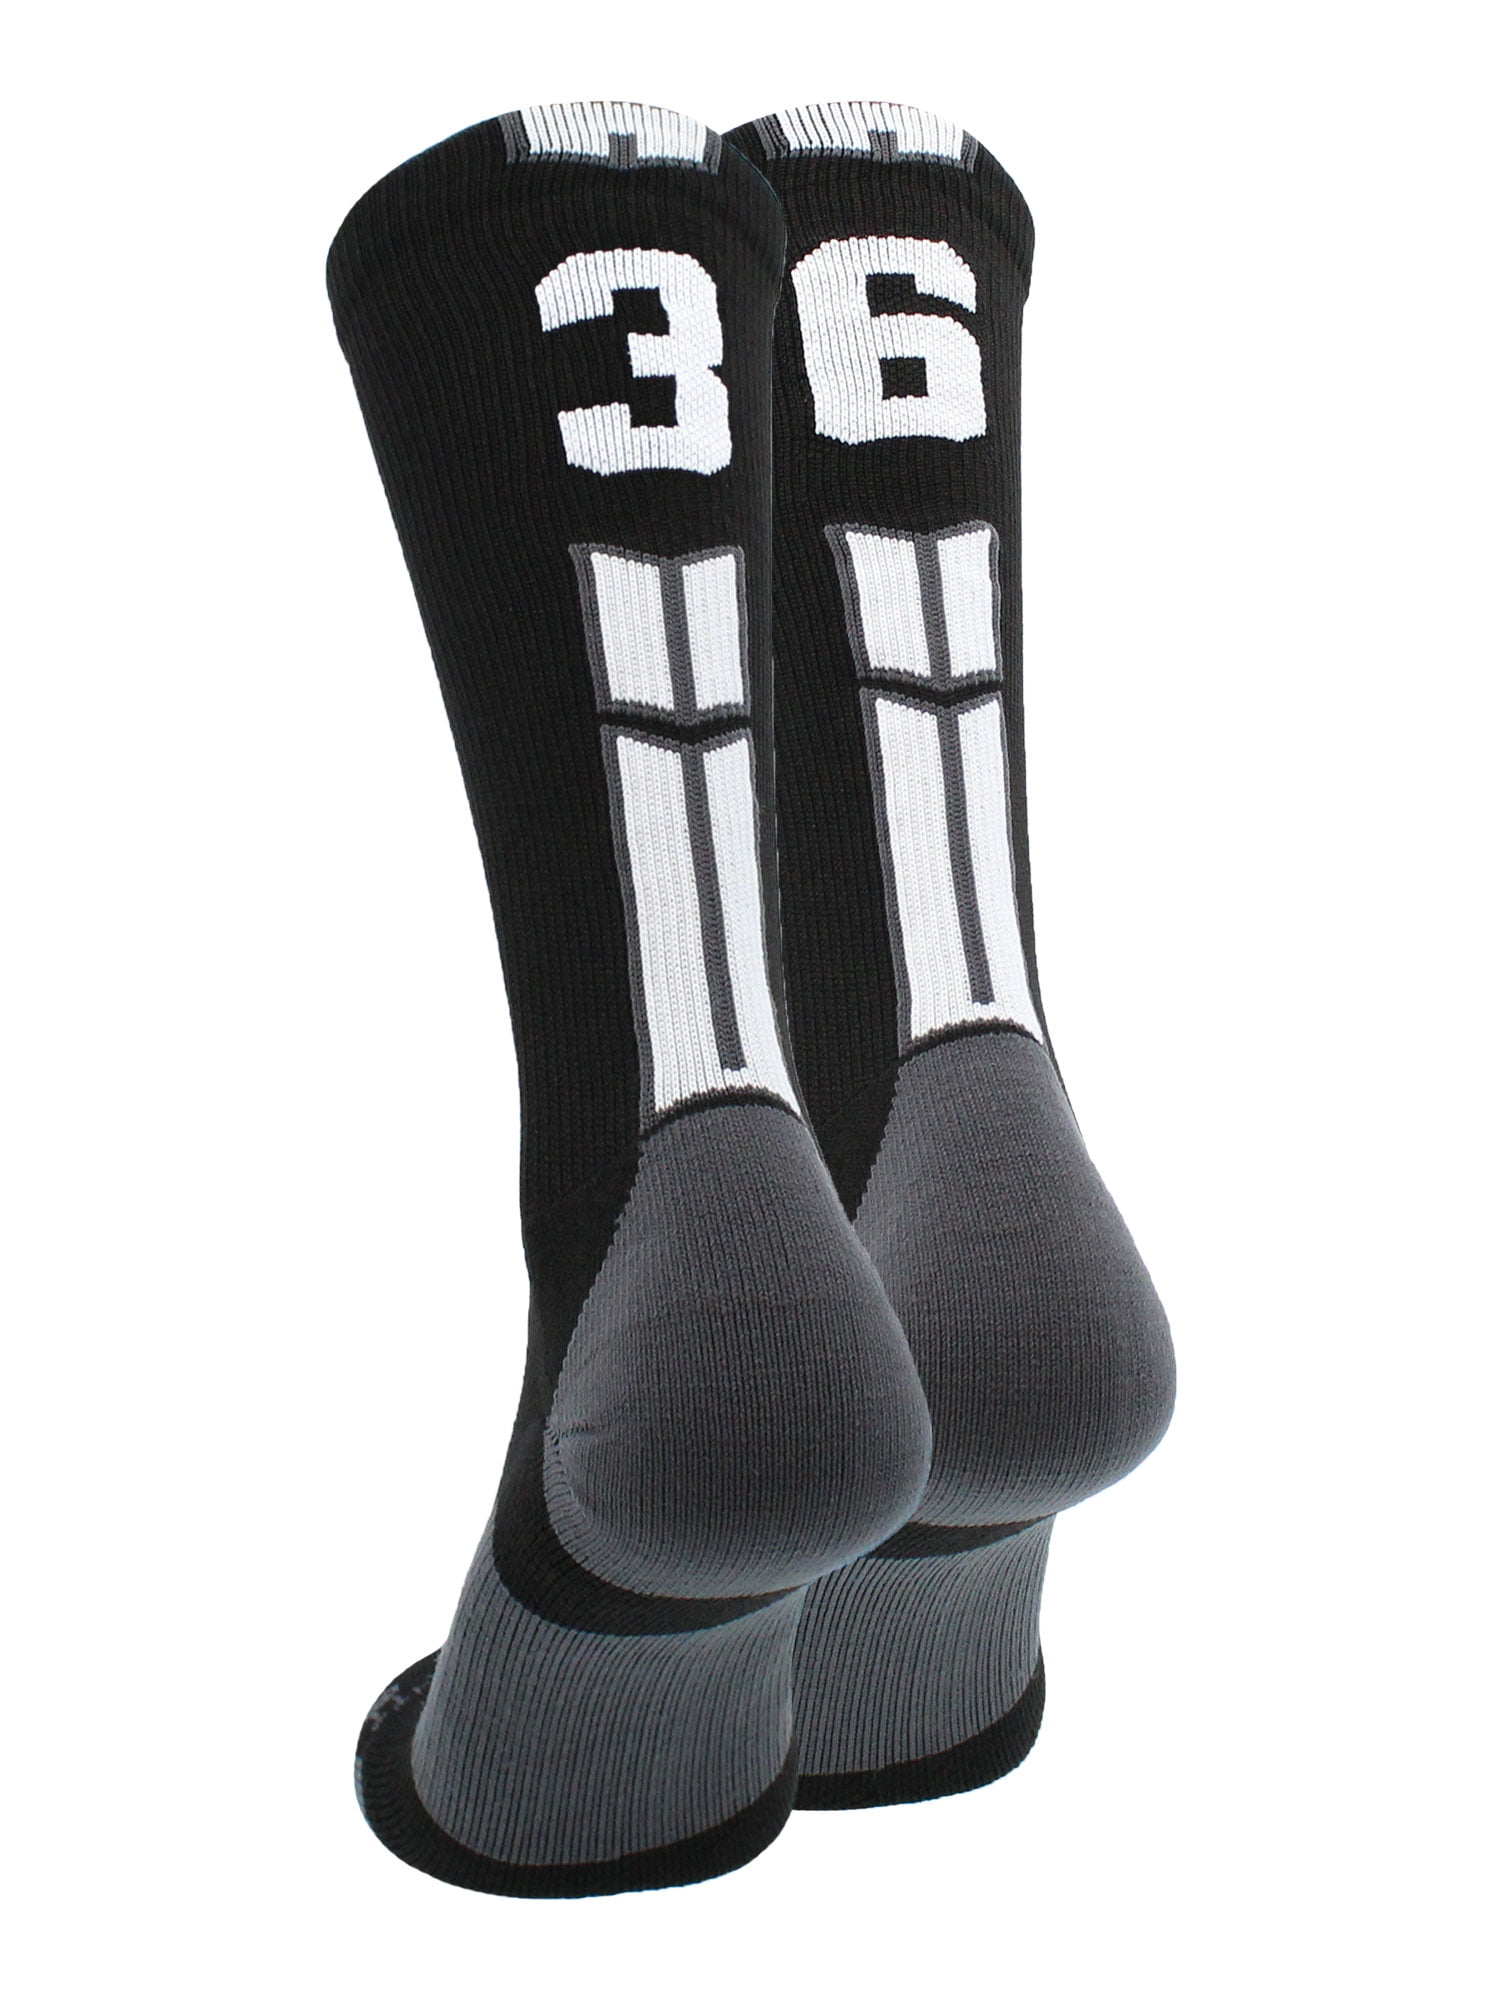 MadSportsStuff Neon Pink and Black Player ID Custom Number Over The Calf Socks for Softball Baseball Football Boys and Girls 